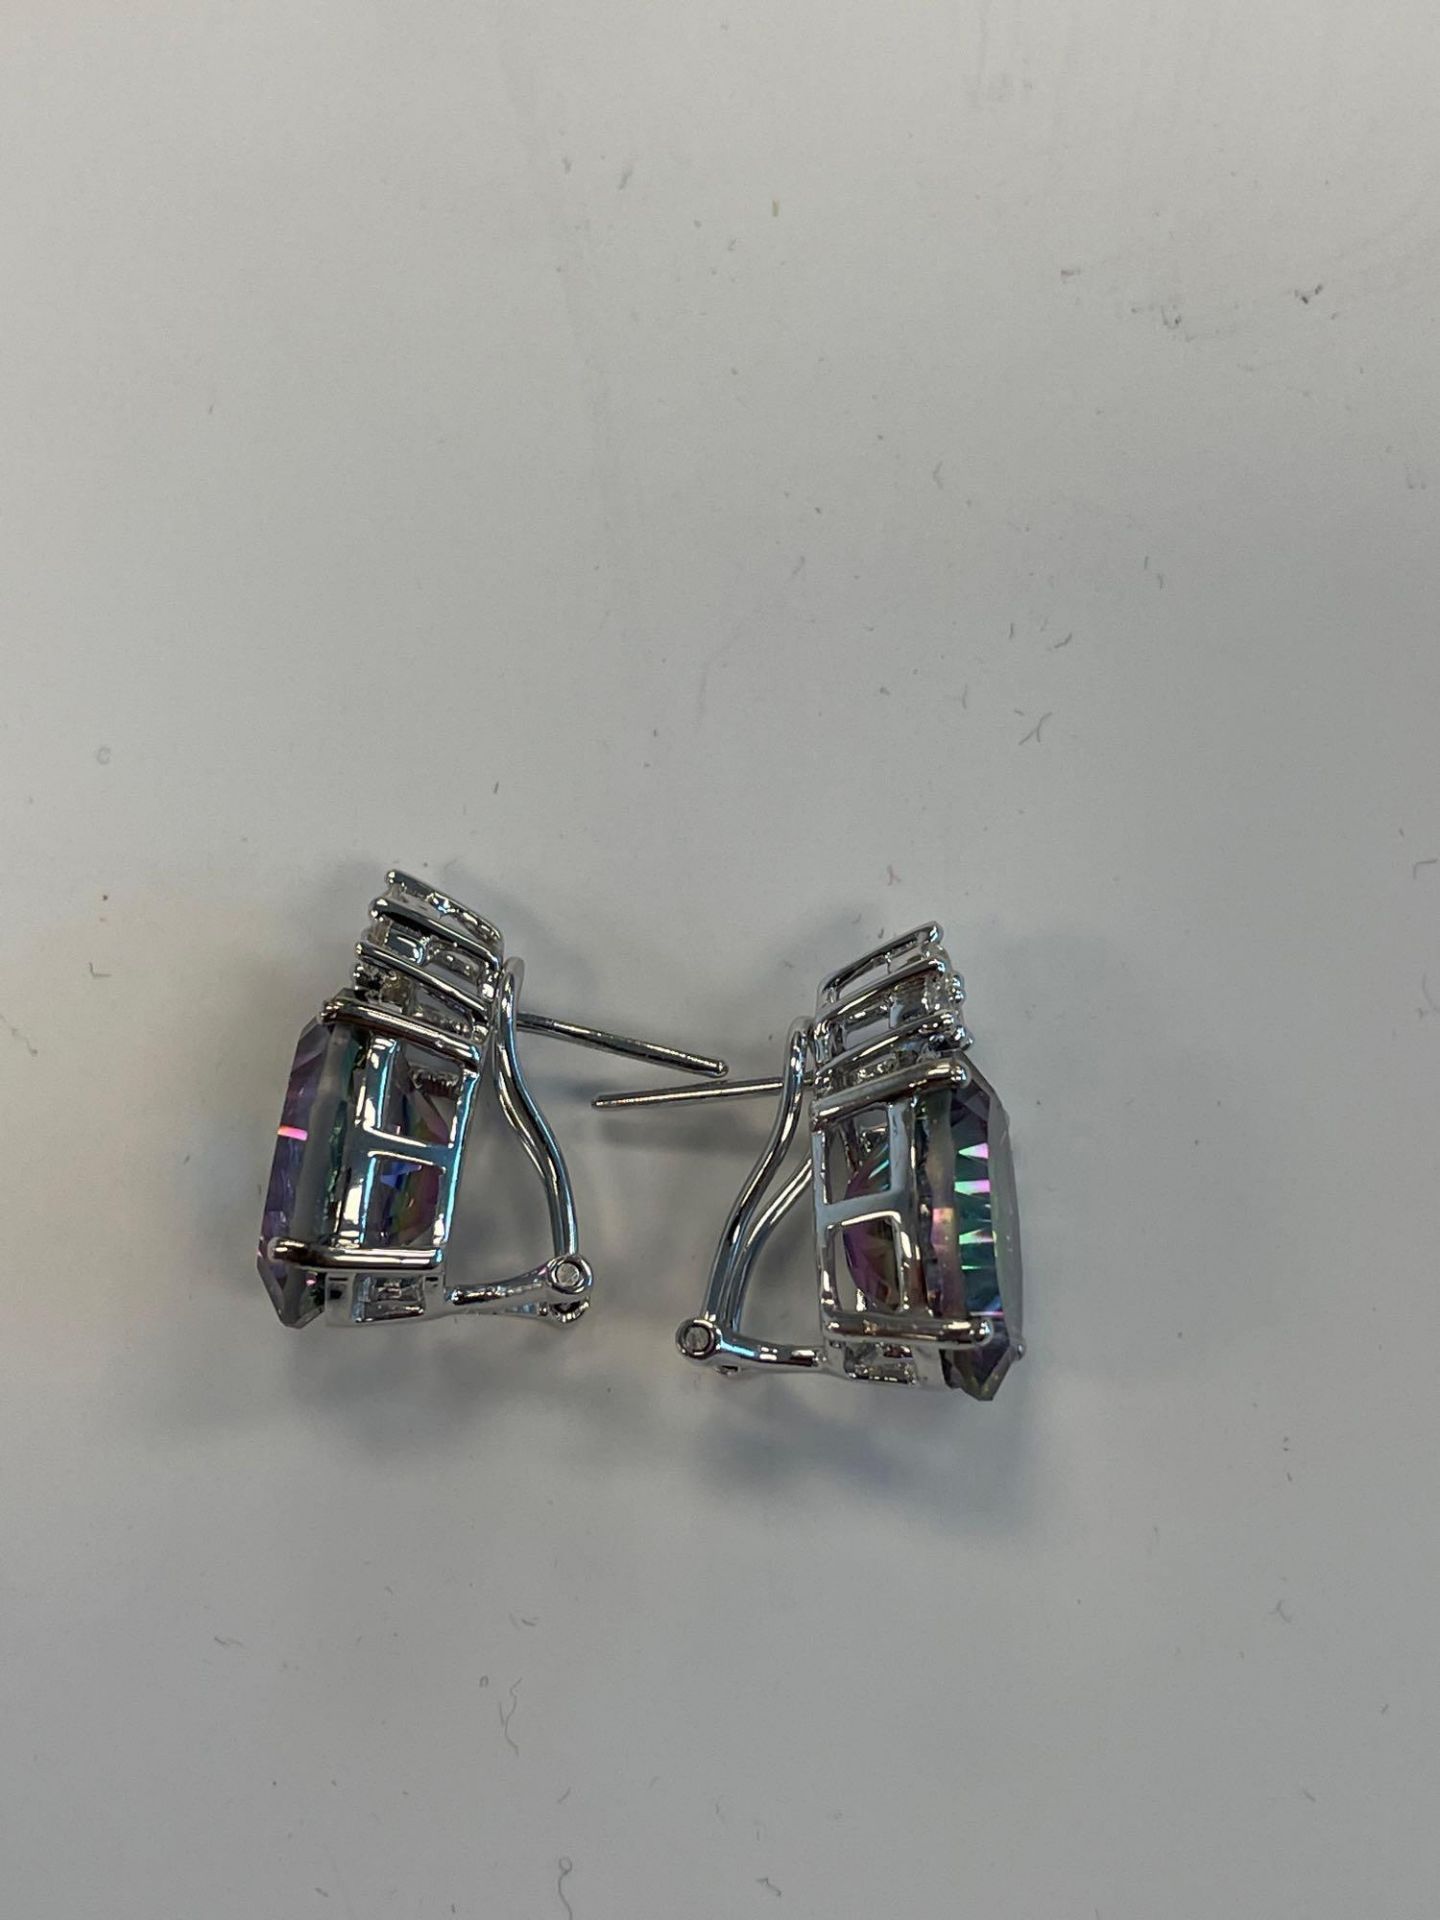 Jewelry; Kunzite Spodumene 21.03 ctw Necklace & Silver Mystic Quartz & White Topaz Earrings by Orian - Image 9 of 9